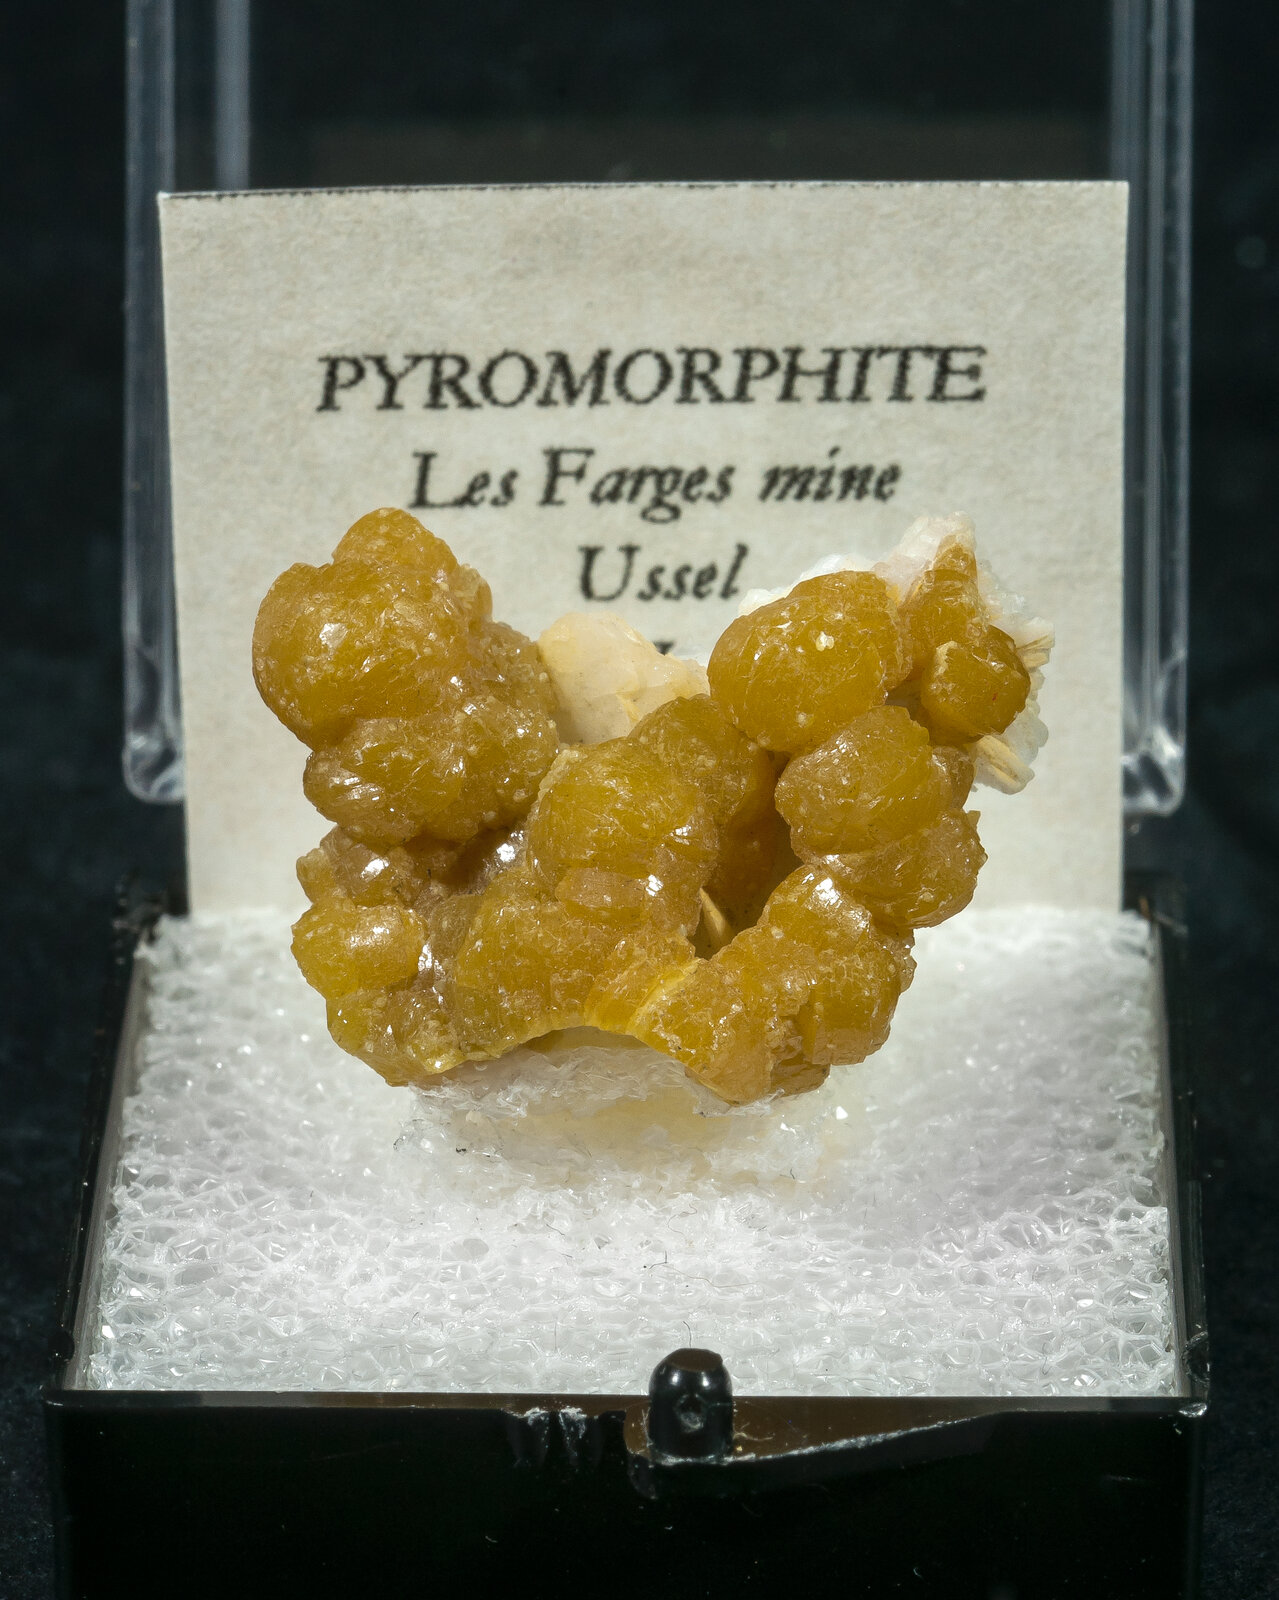 specimens/s_imagesAN5/Pyromorphite-TTV86AN5f1.jpg